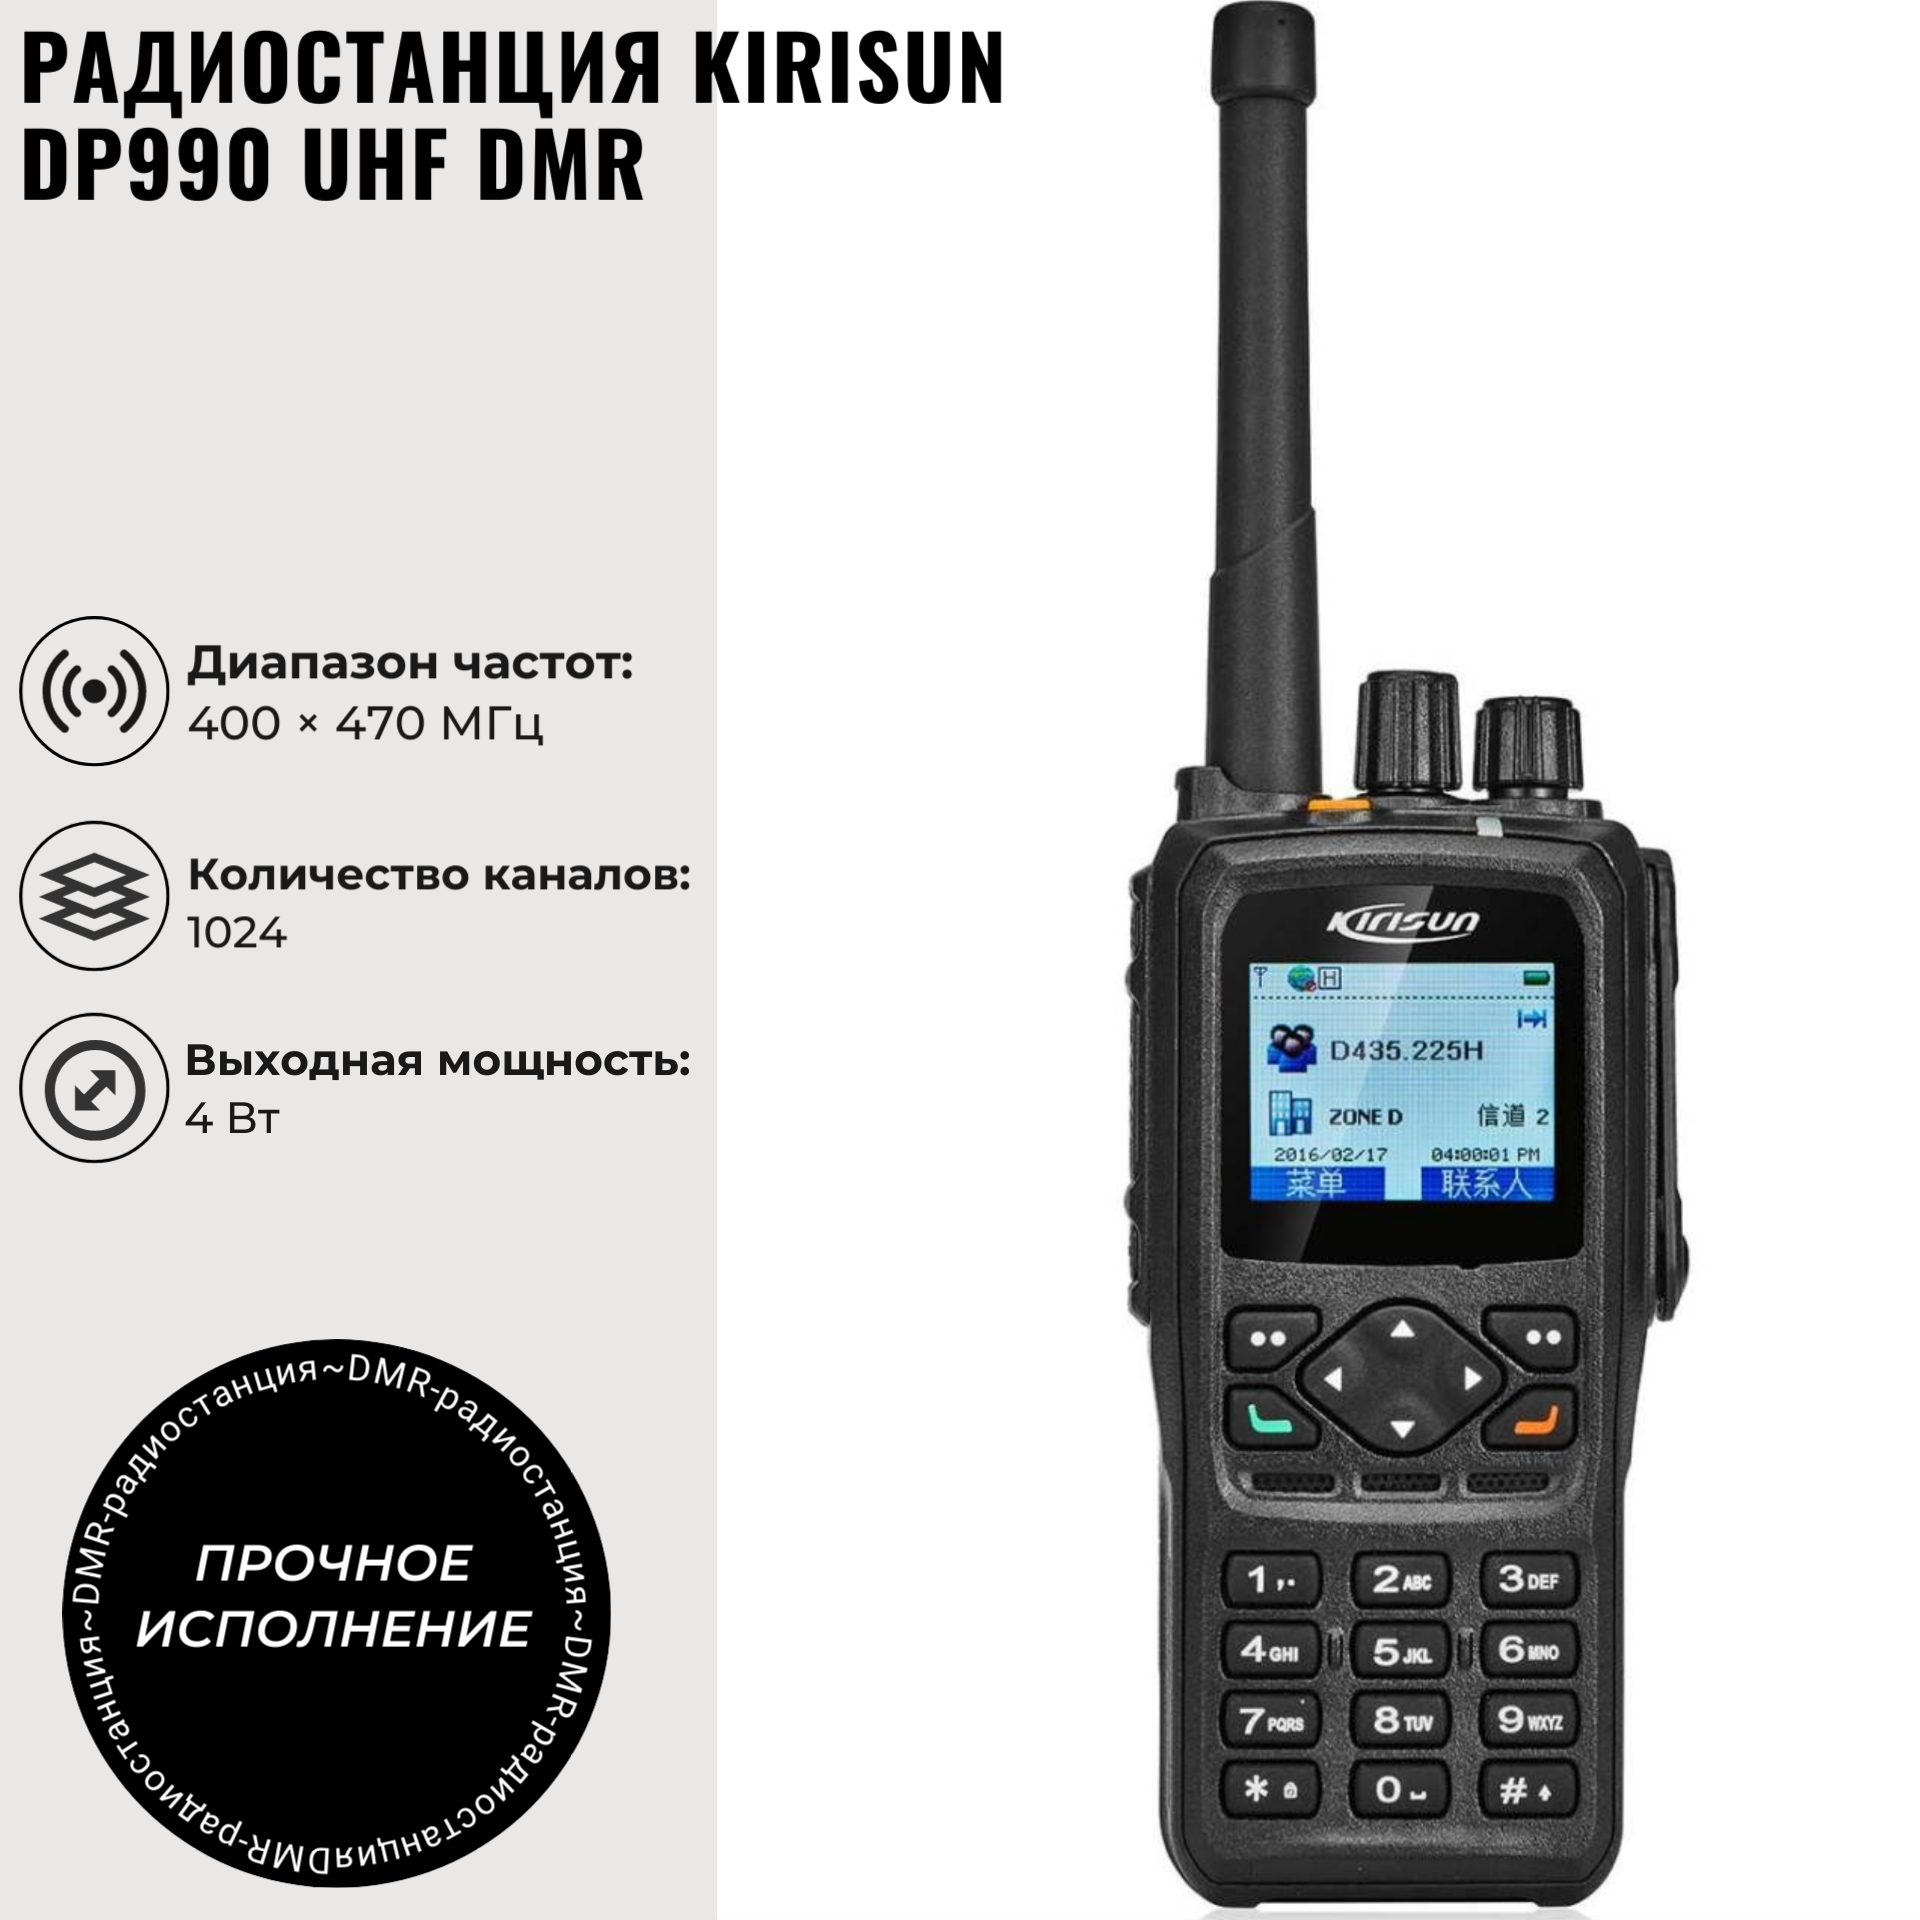 Радиостанция портативная DP990 UHF DMR Kirisun (без ЗУ)